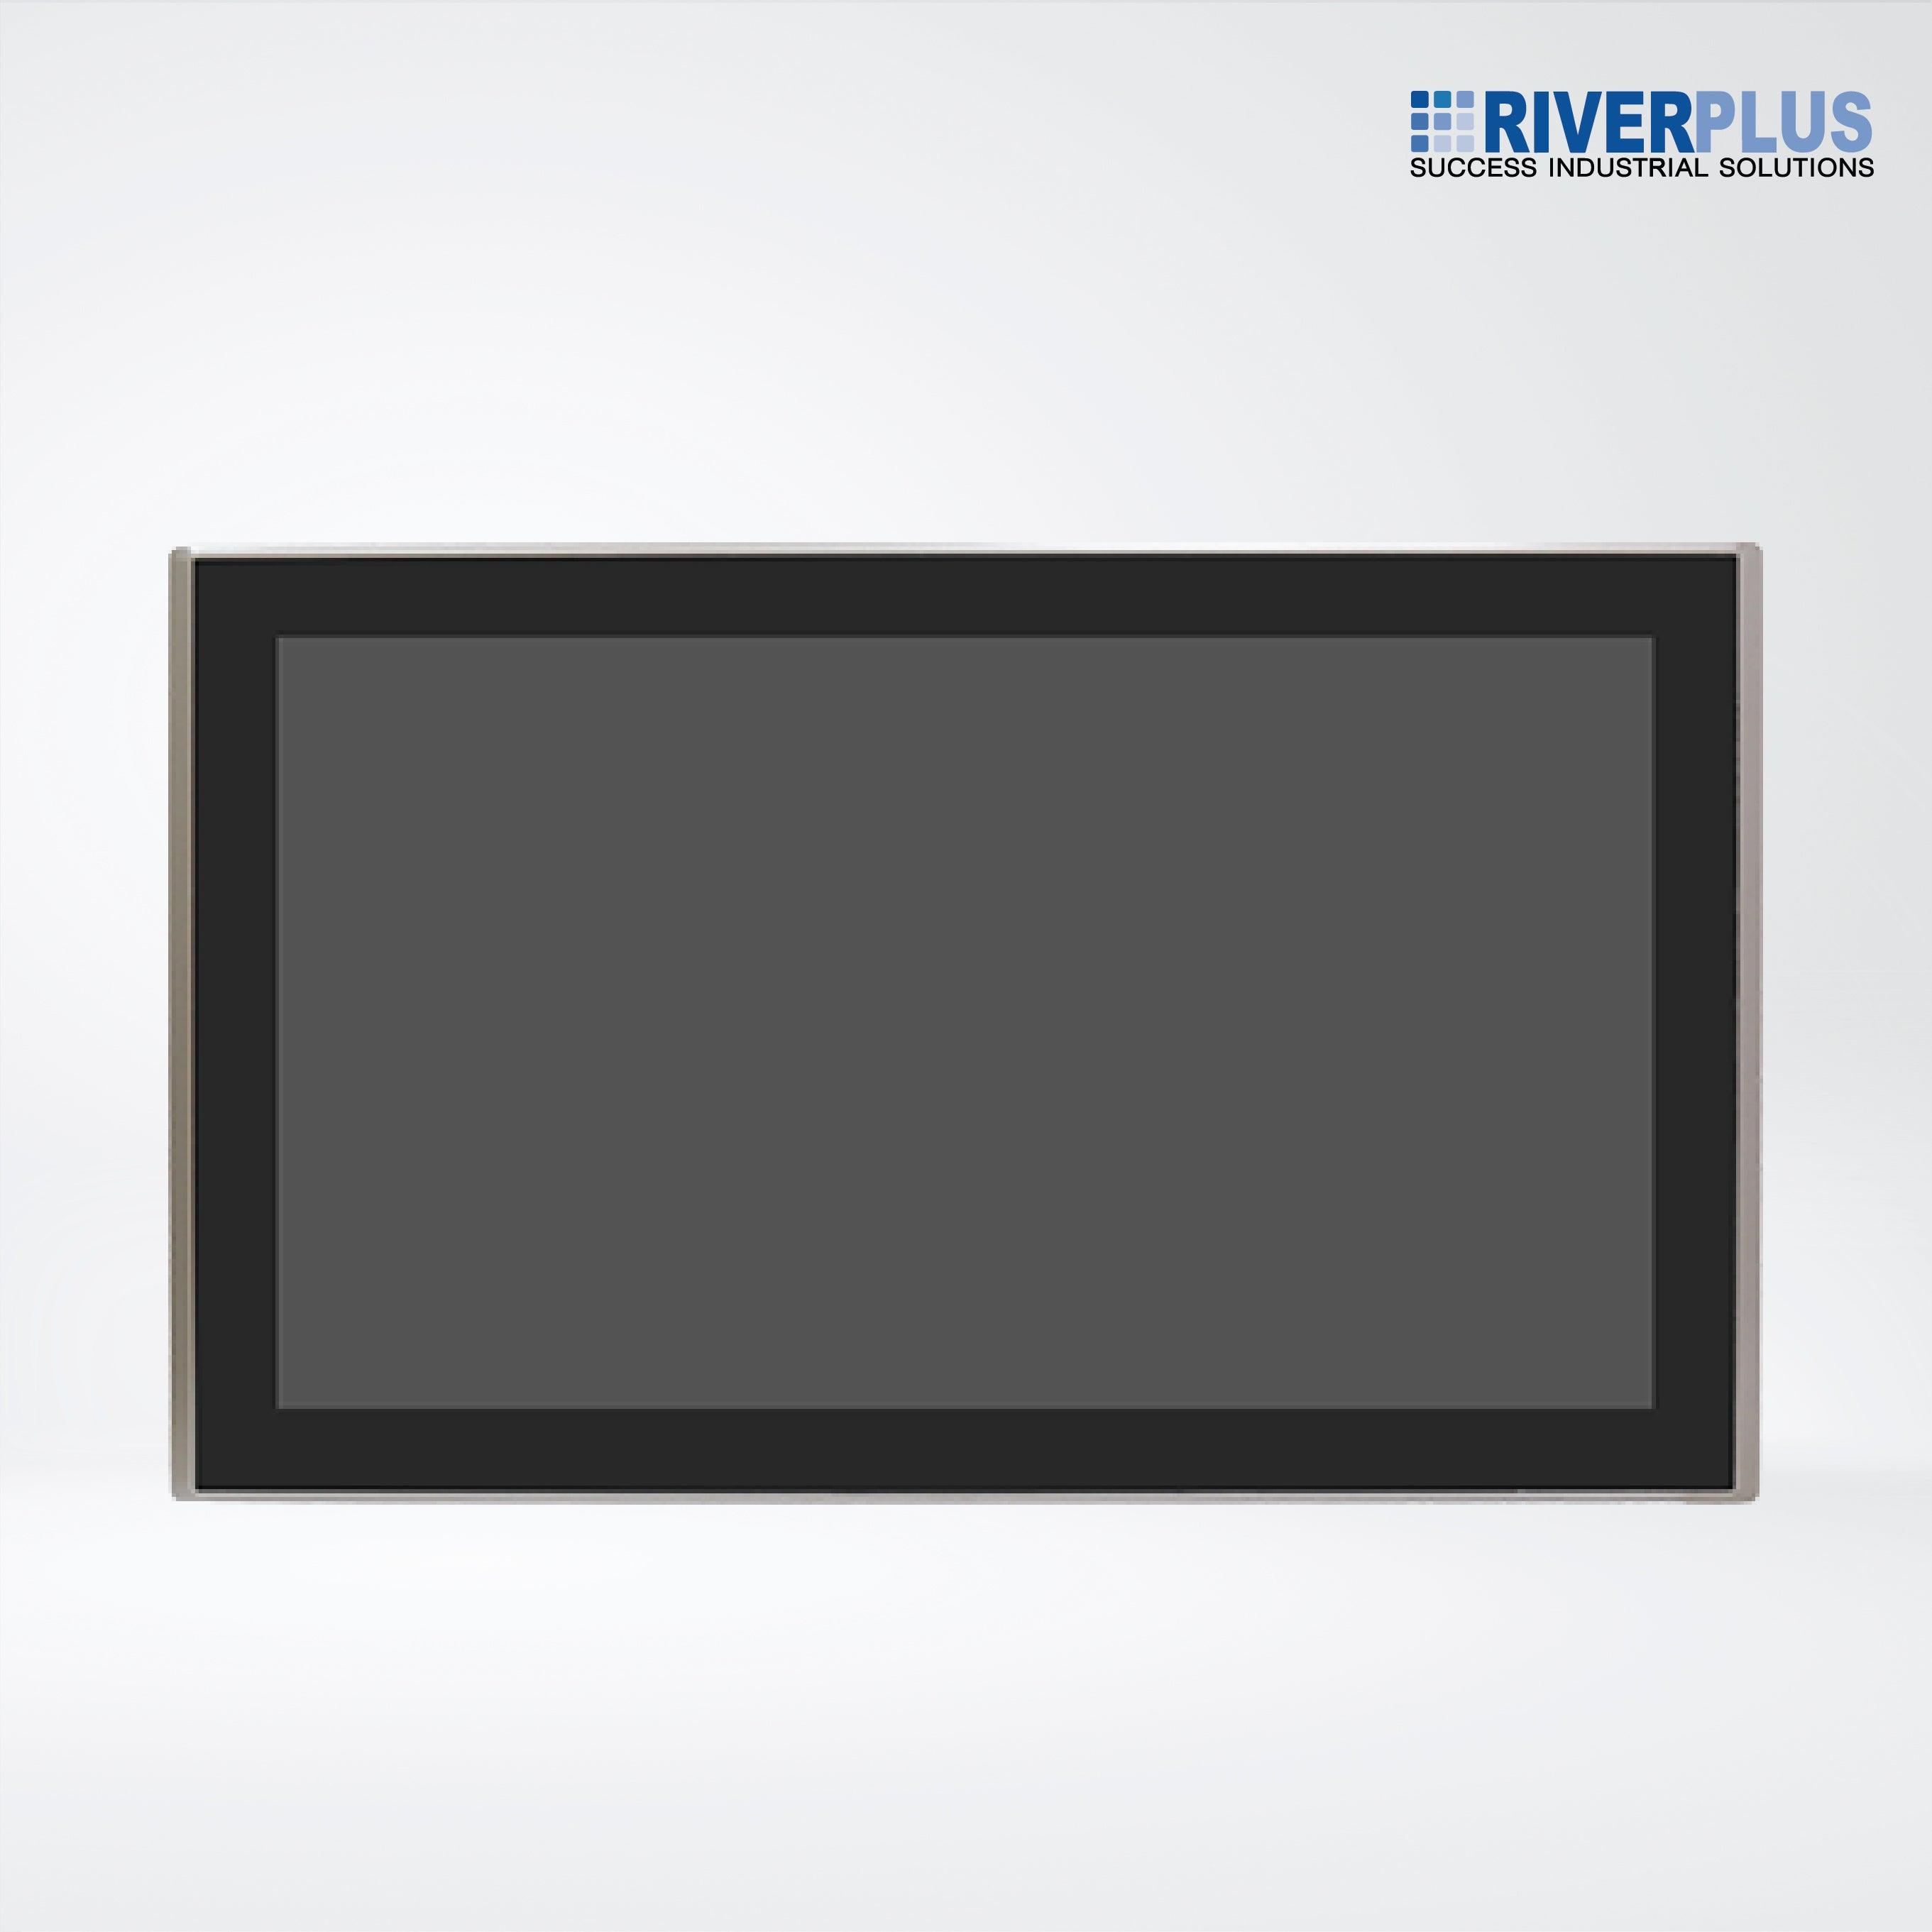 ARCDIS-132AP 32” Front Panel IP66 Aluminum Die-casting Display - Riverplus